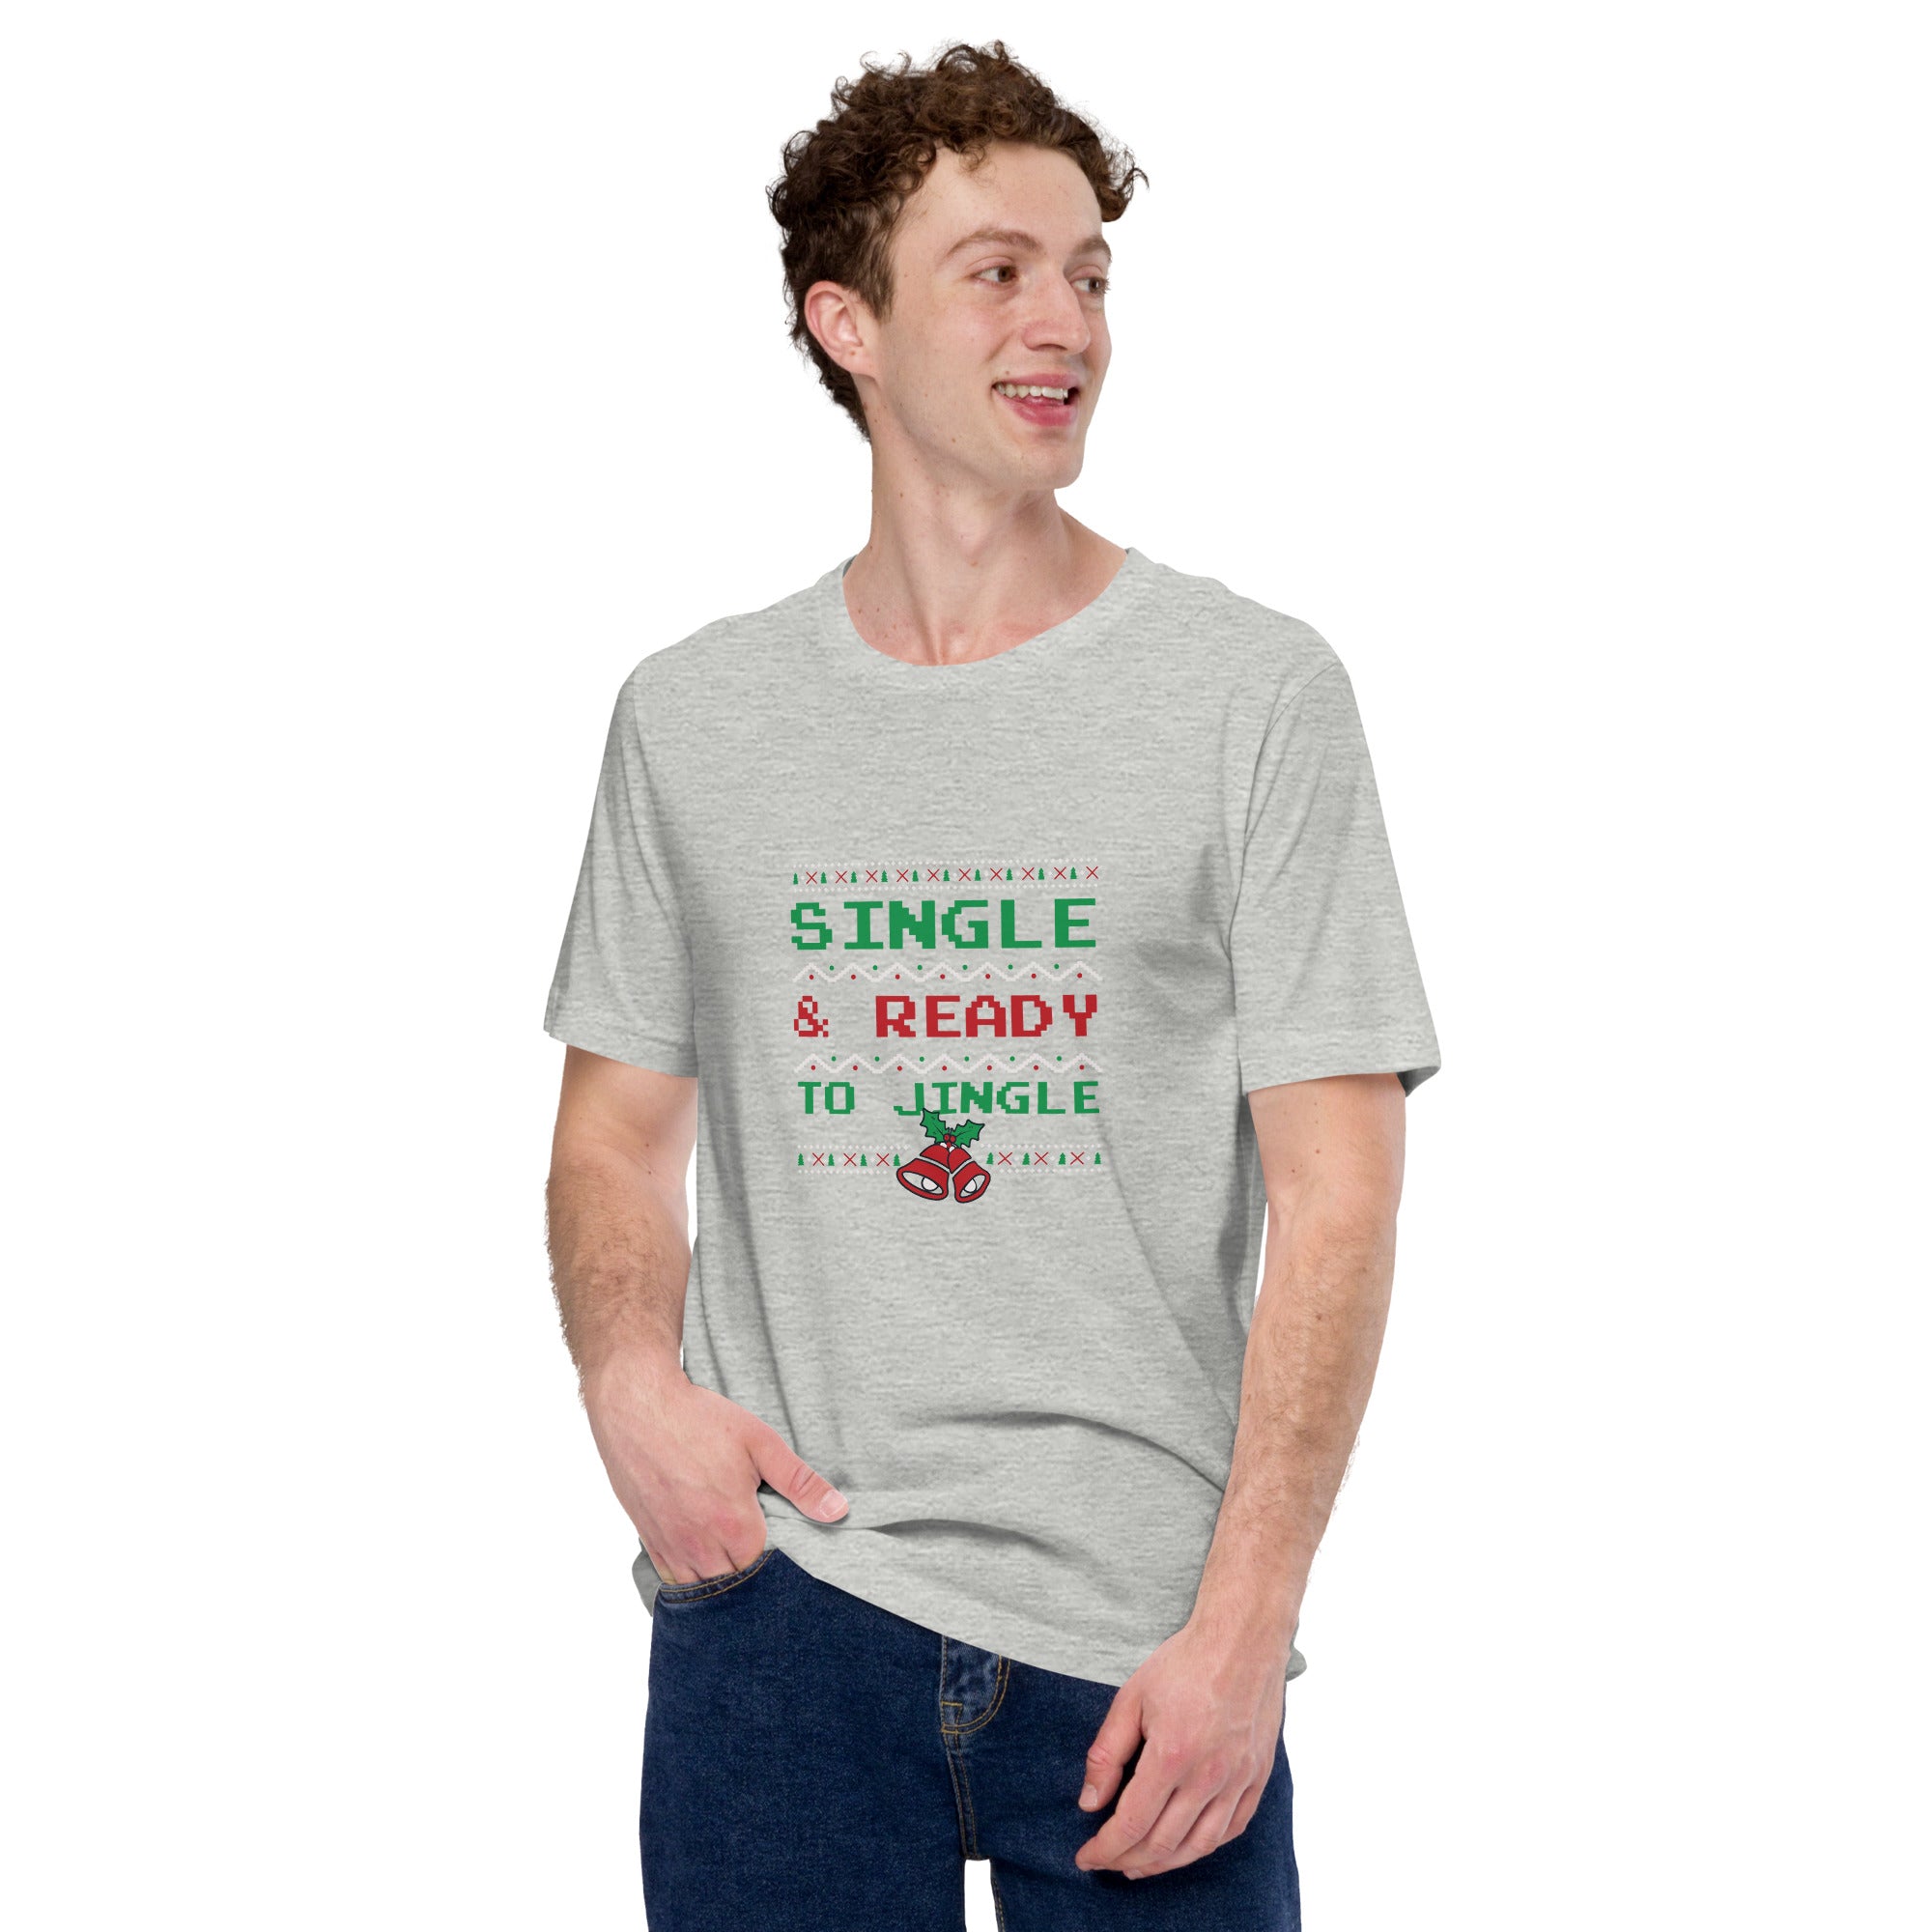 Single & Ready To JIngle Unisex t-shirt